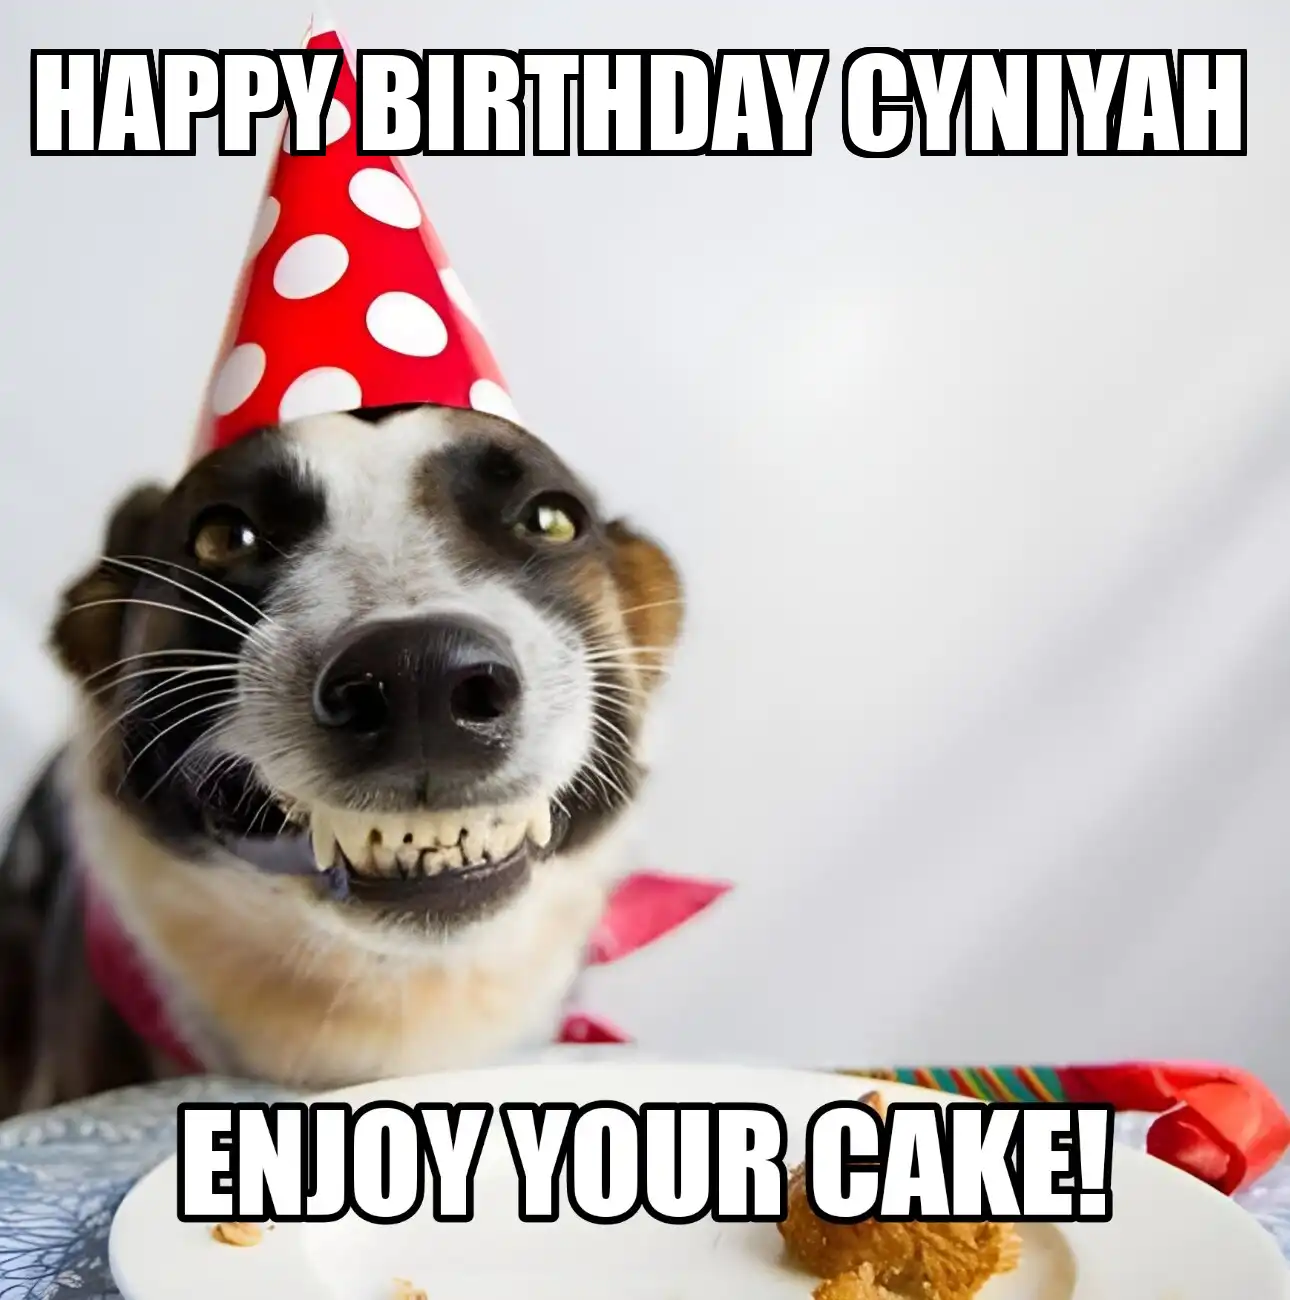 Happy Birthday Cyniyah Enjoy Your Cake Dog Meme